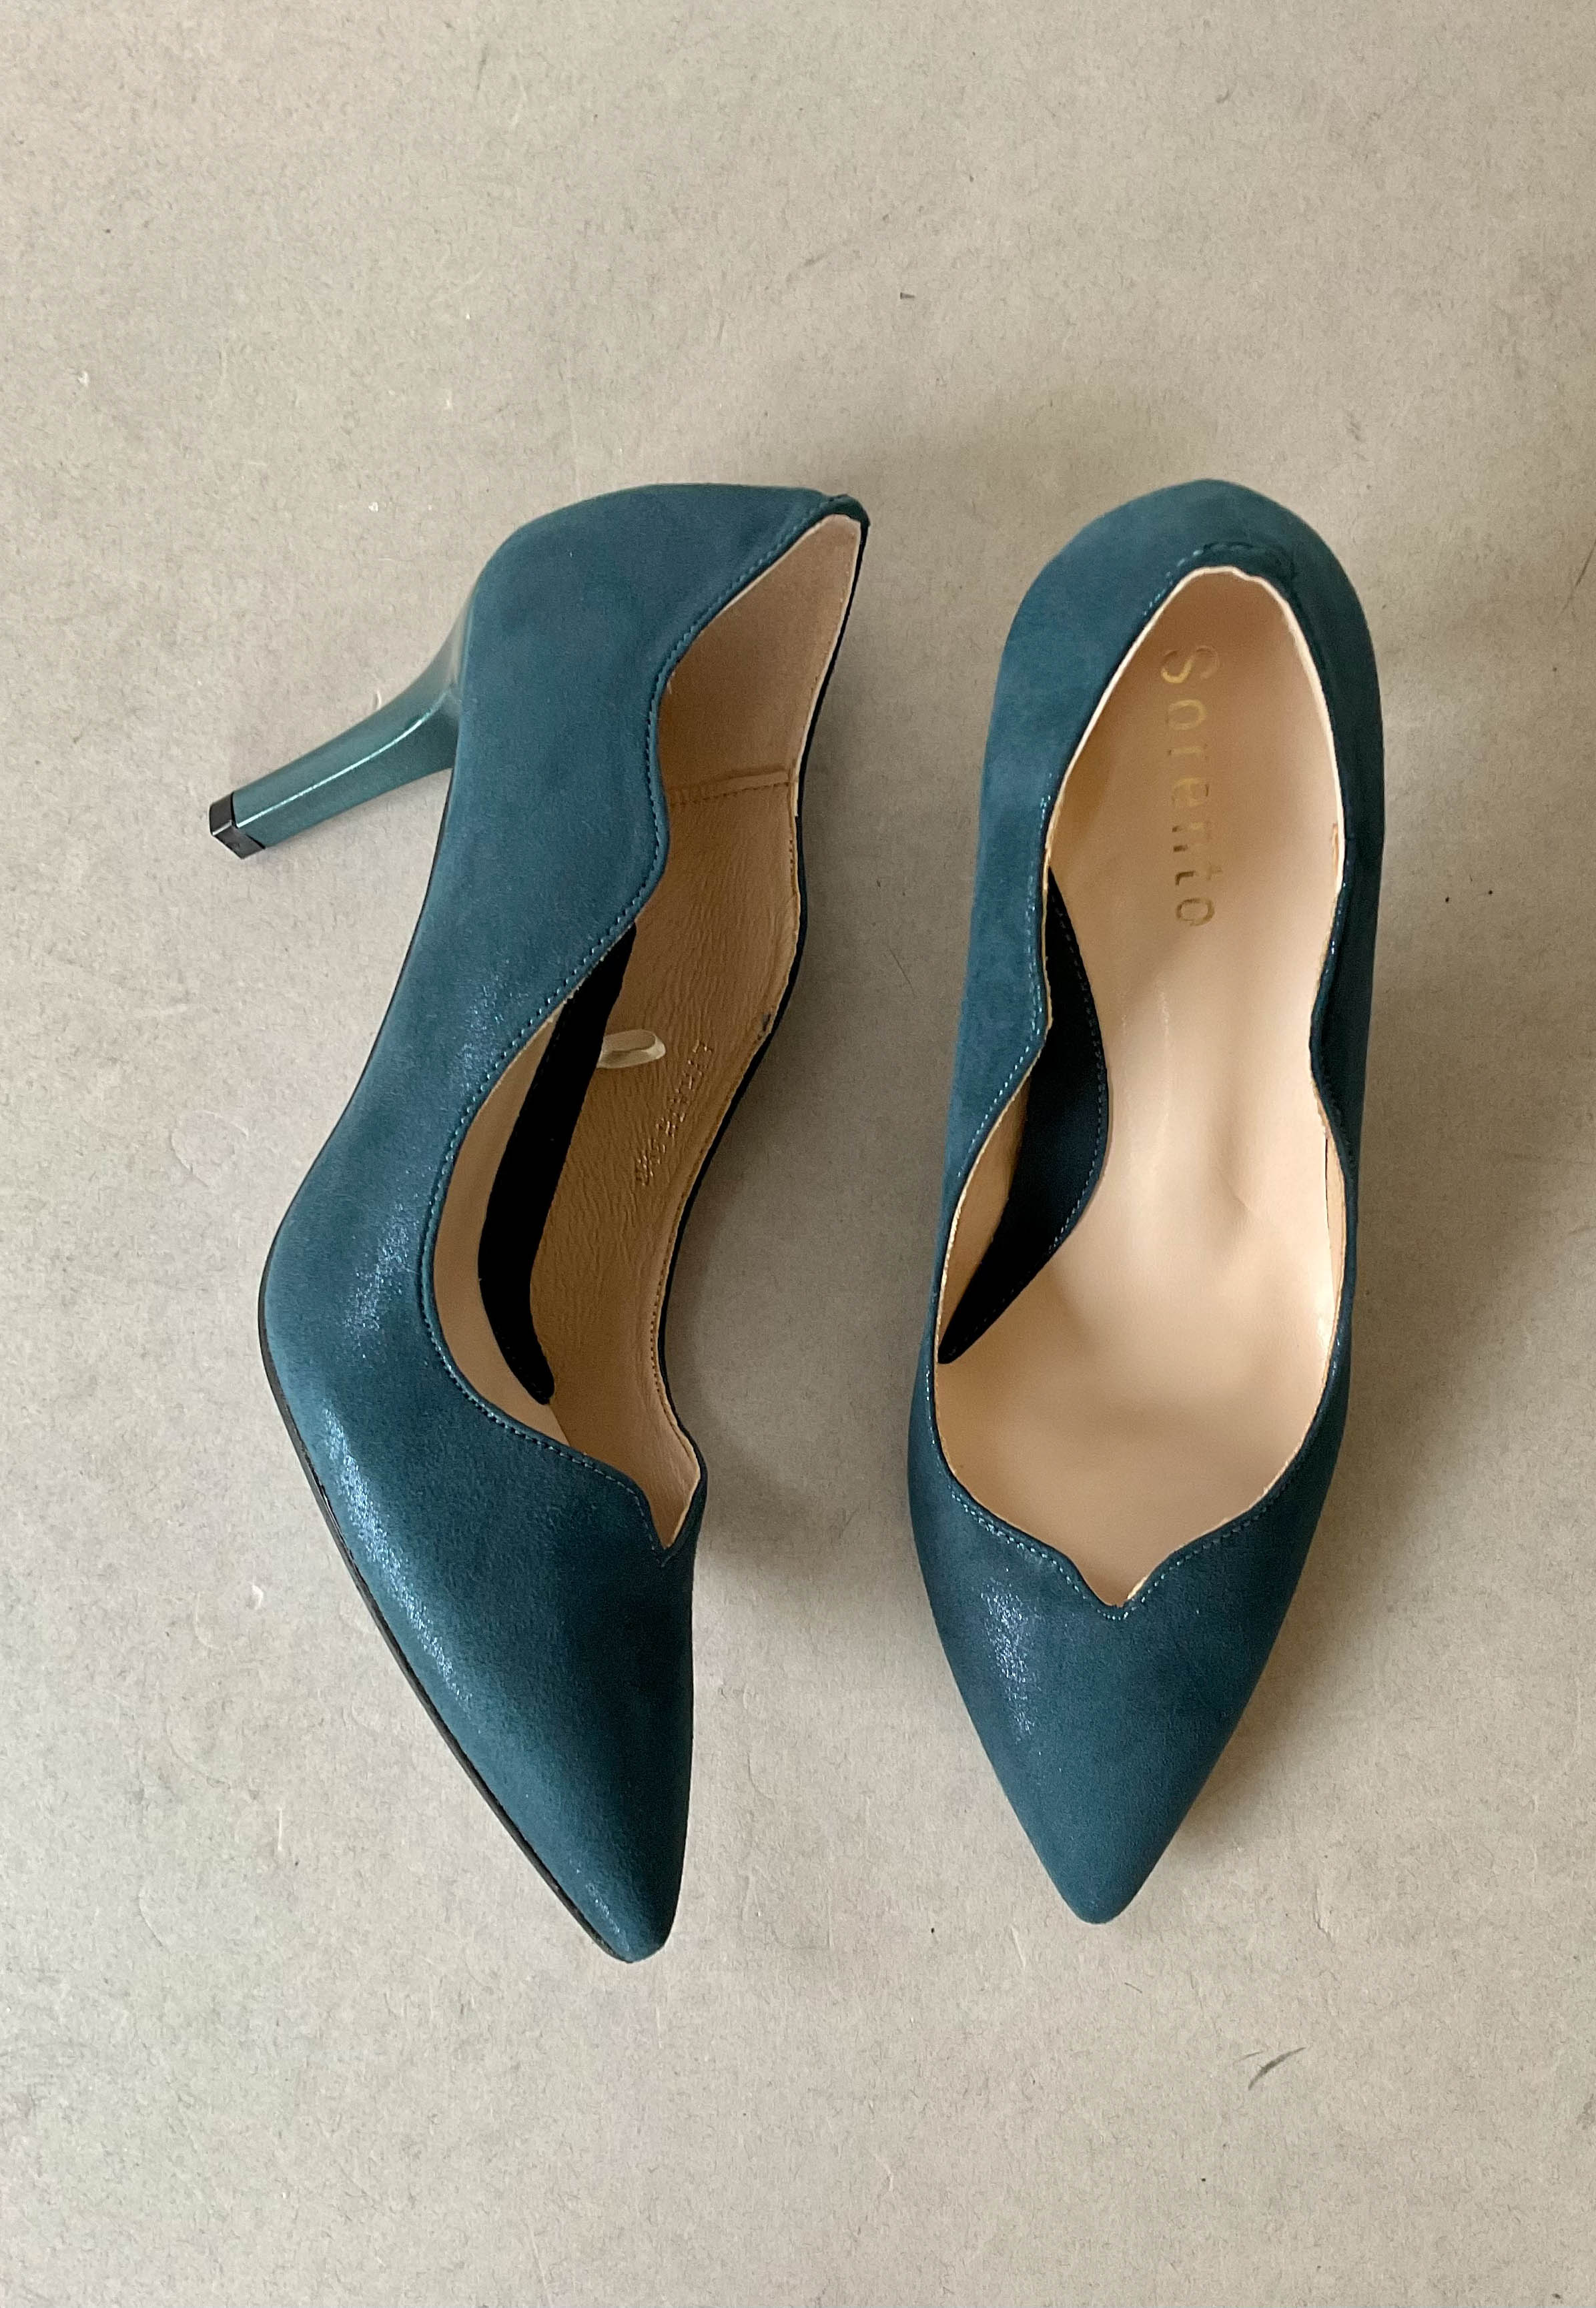 sorento green 3 inch heels